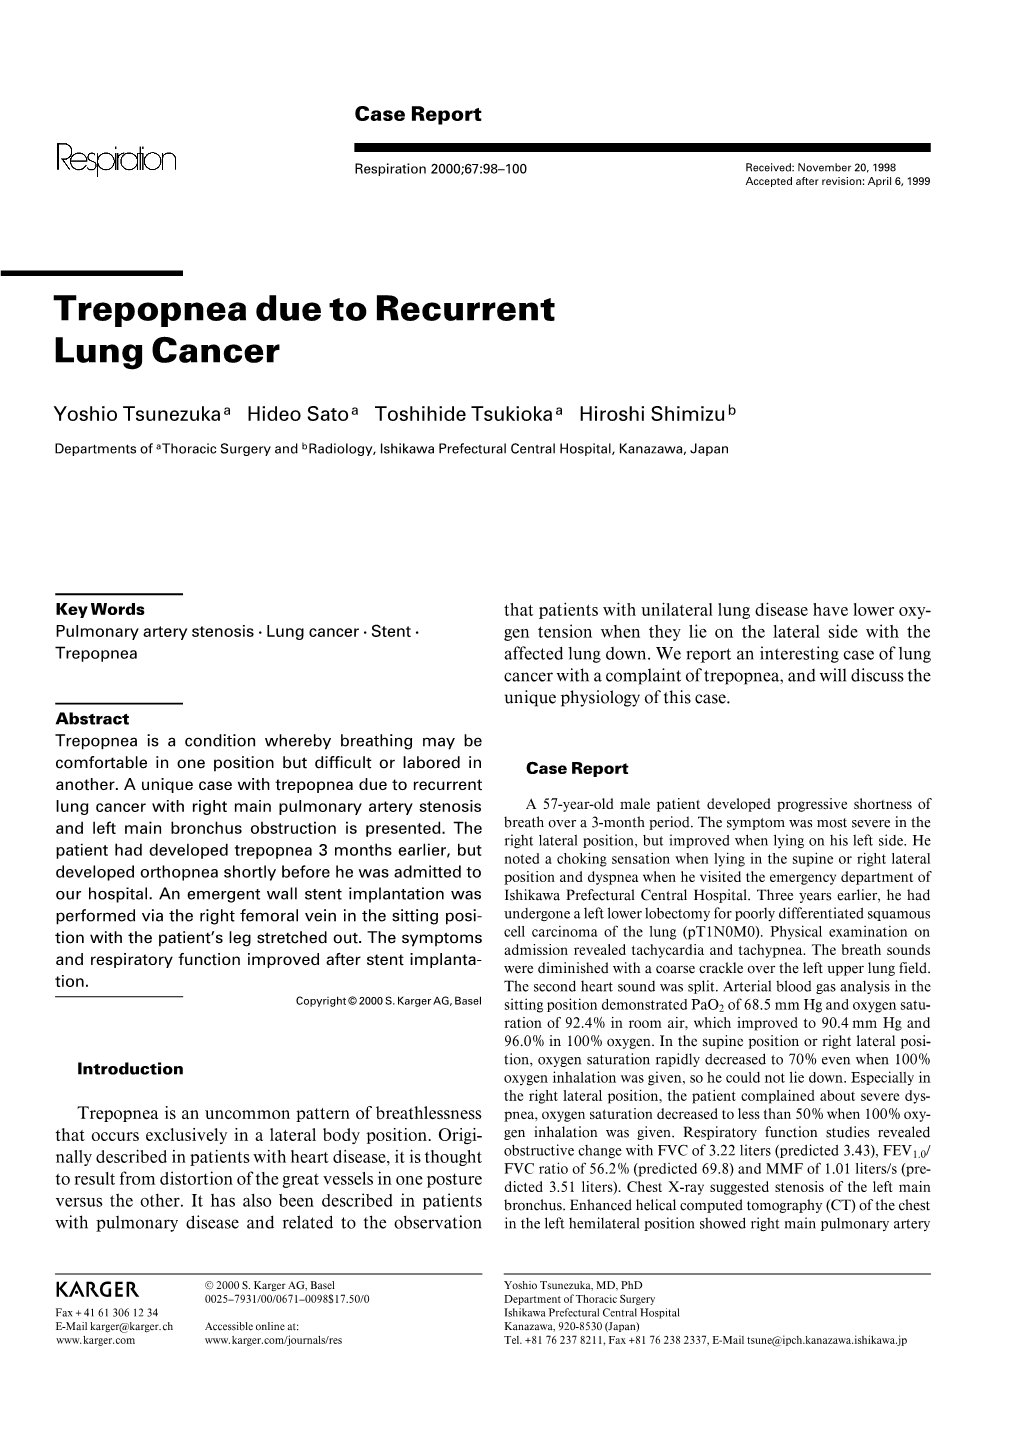 Trepopnea Due to Recurrent Lung Cancer